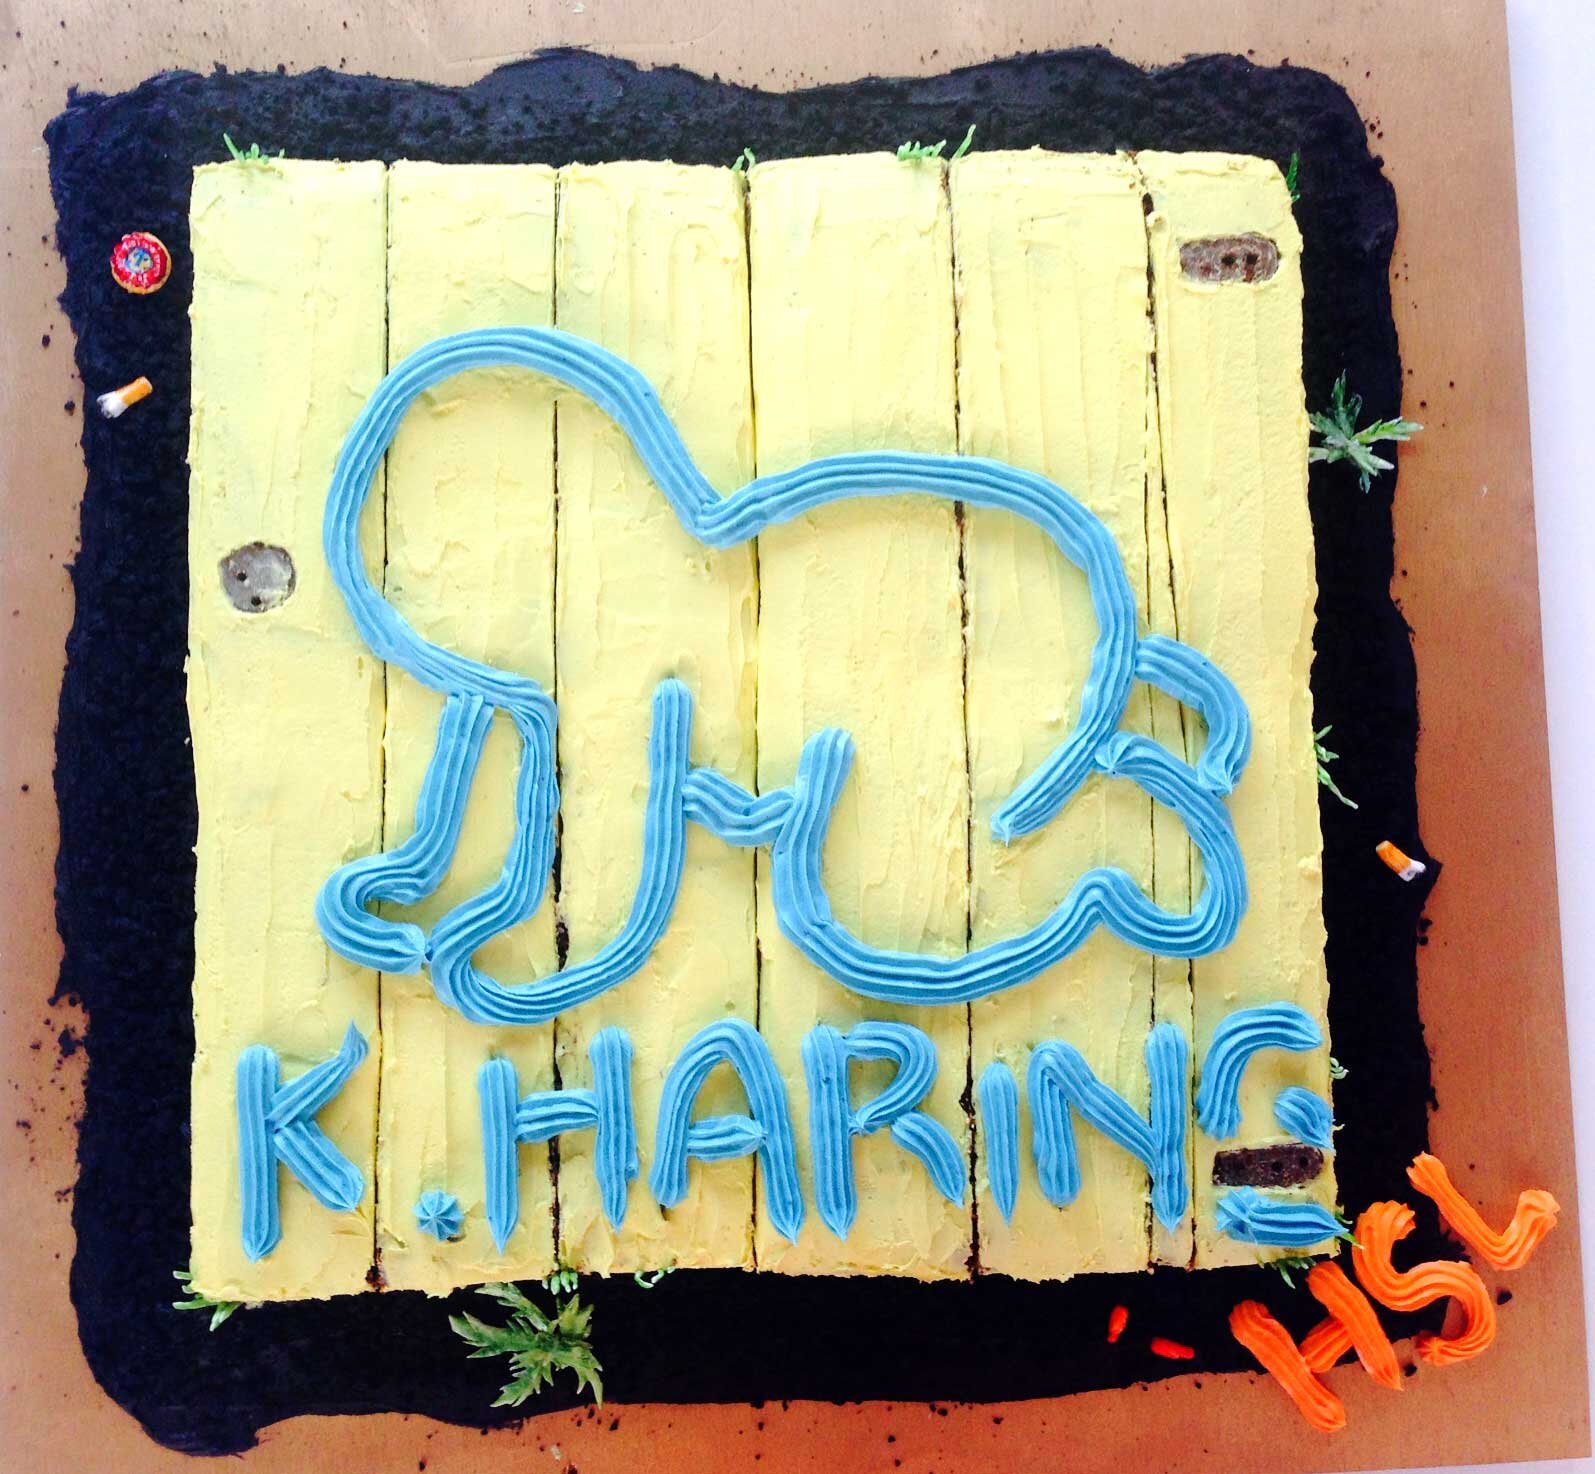 Keith Haring Cake, 2014